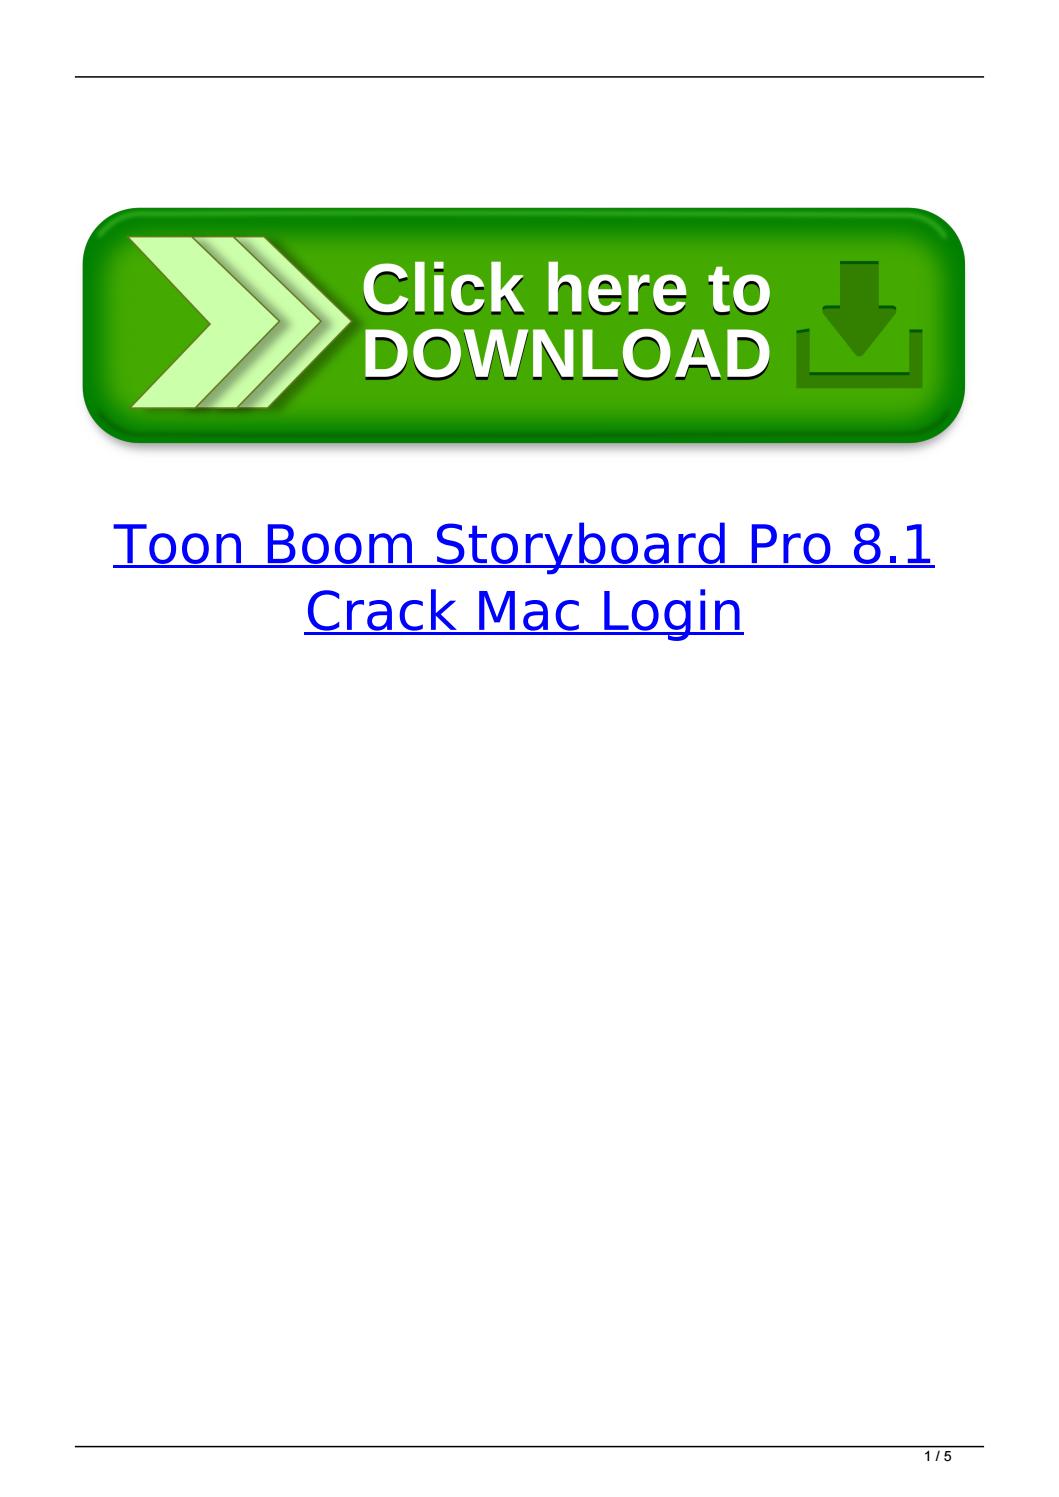 Toon boom storyboard pro download